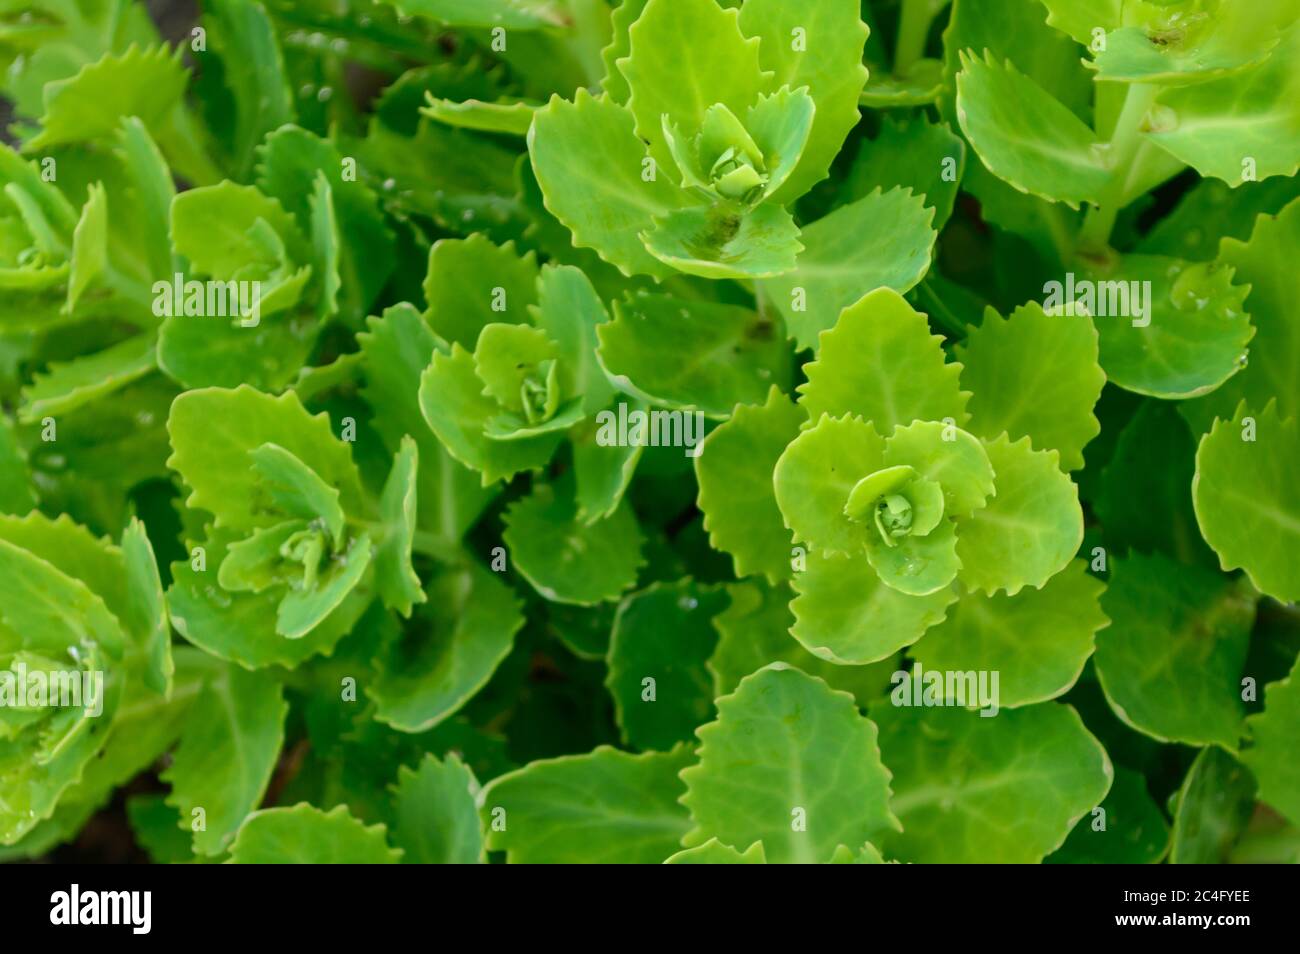 orpine plant leaves make green background. green foliage pattern. hylotelephium telephium leaves. Sedum telephium foliage top view. Stock Photo